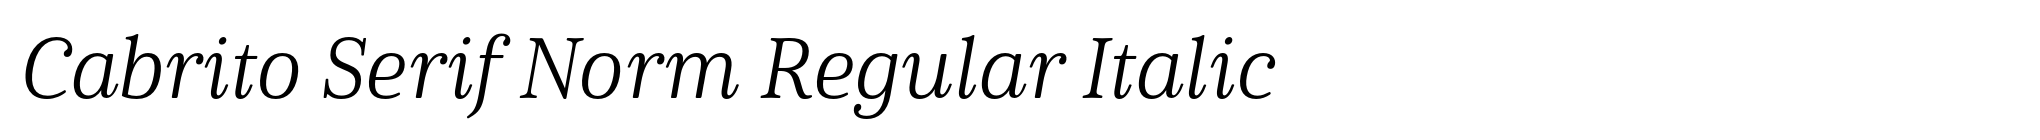 Cabrito Serif Norm Regular Italic image